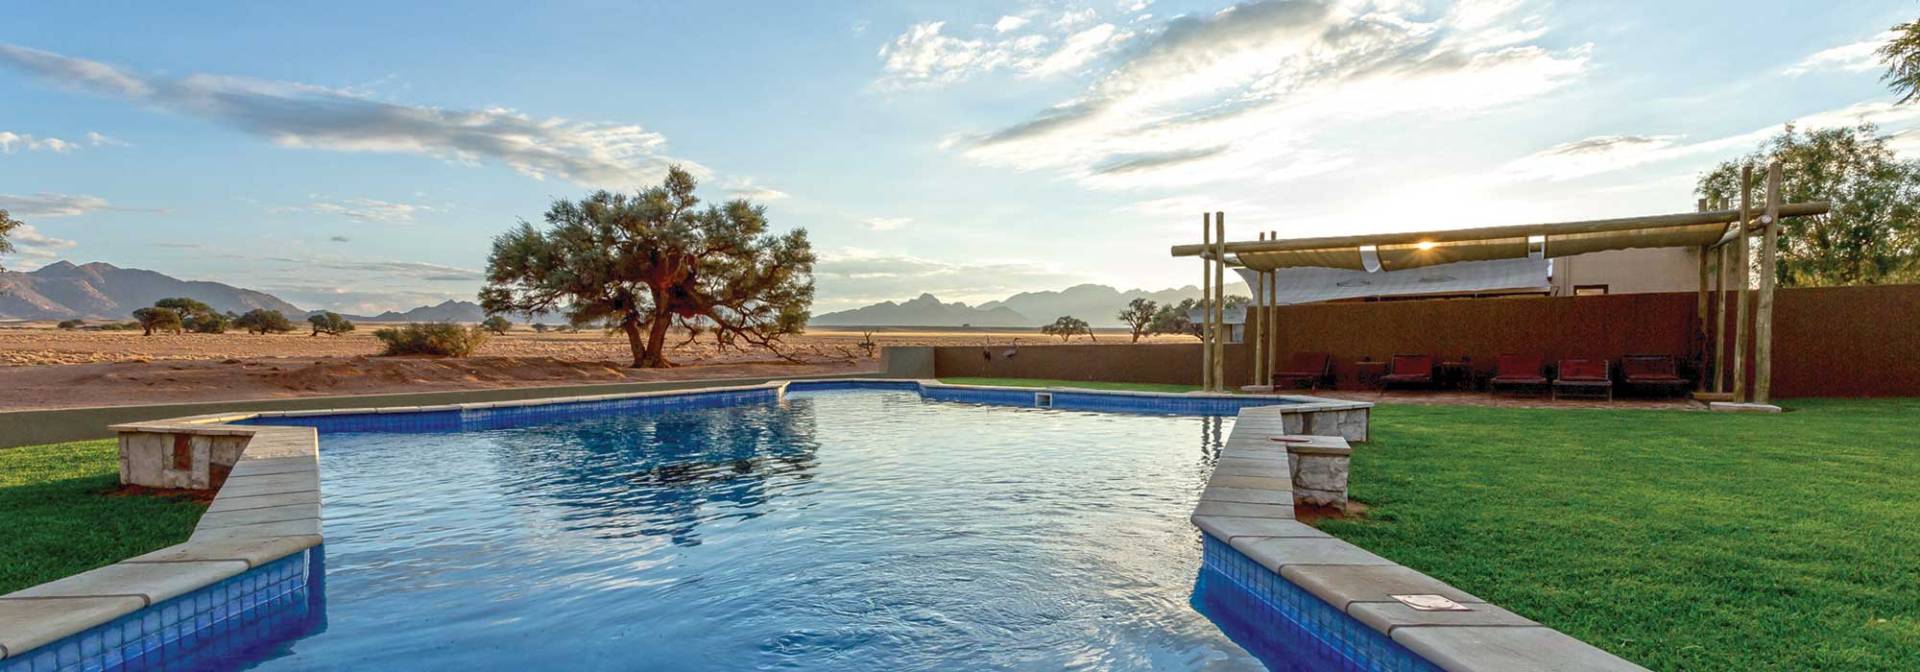 Swimming Pool in the Namib Desert